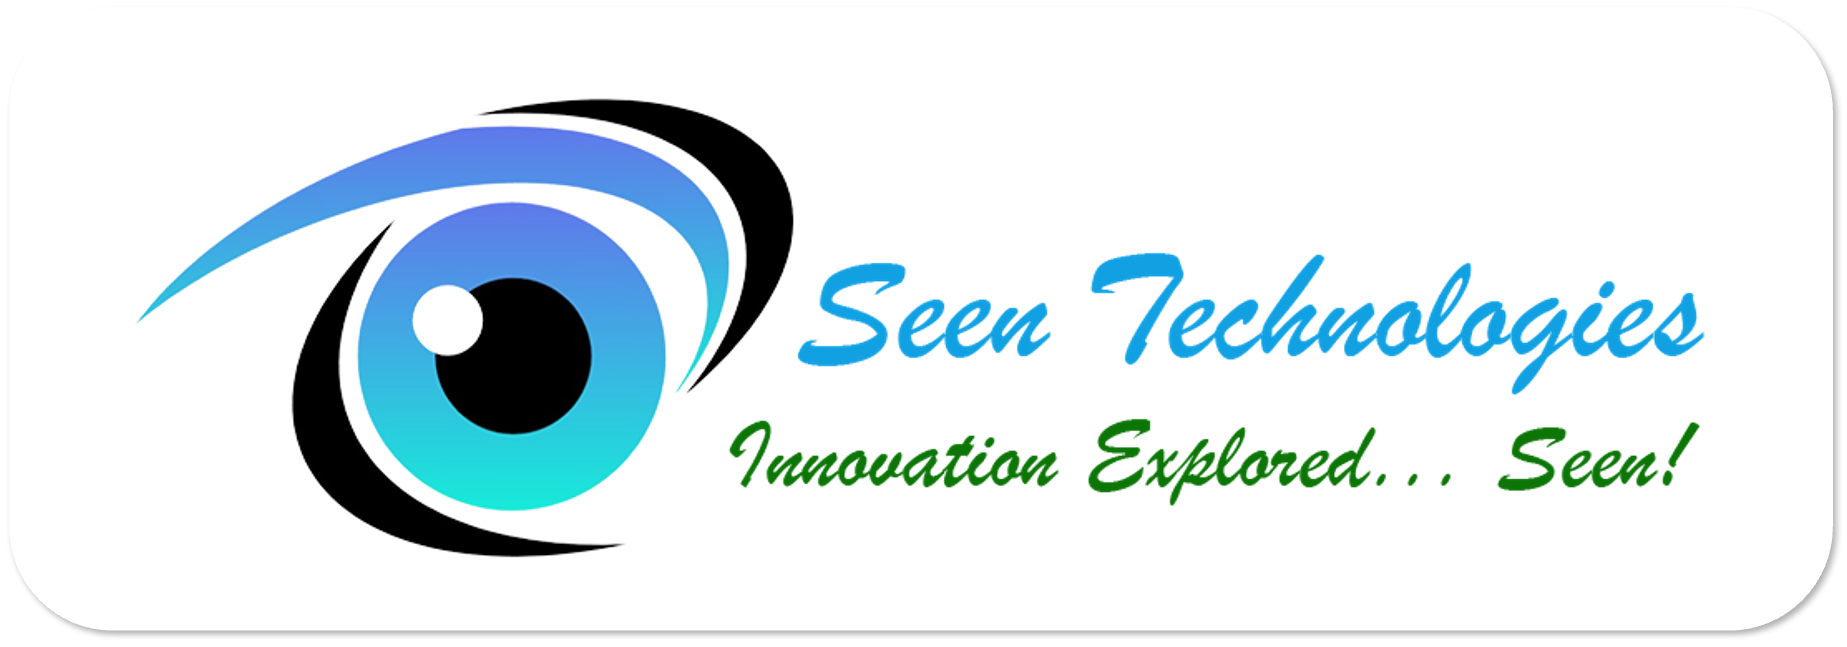 Seen Technologies - The Best Software Development Company